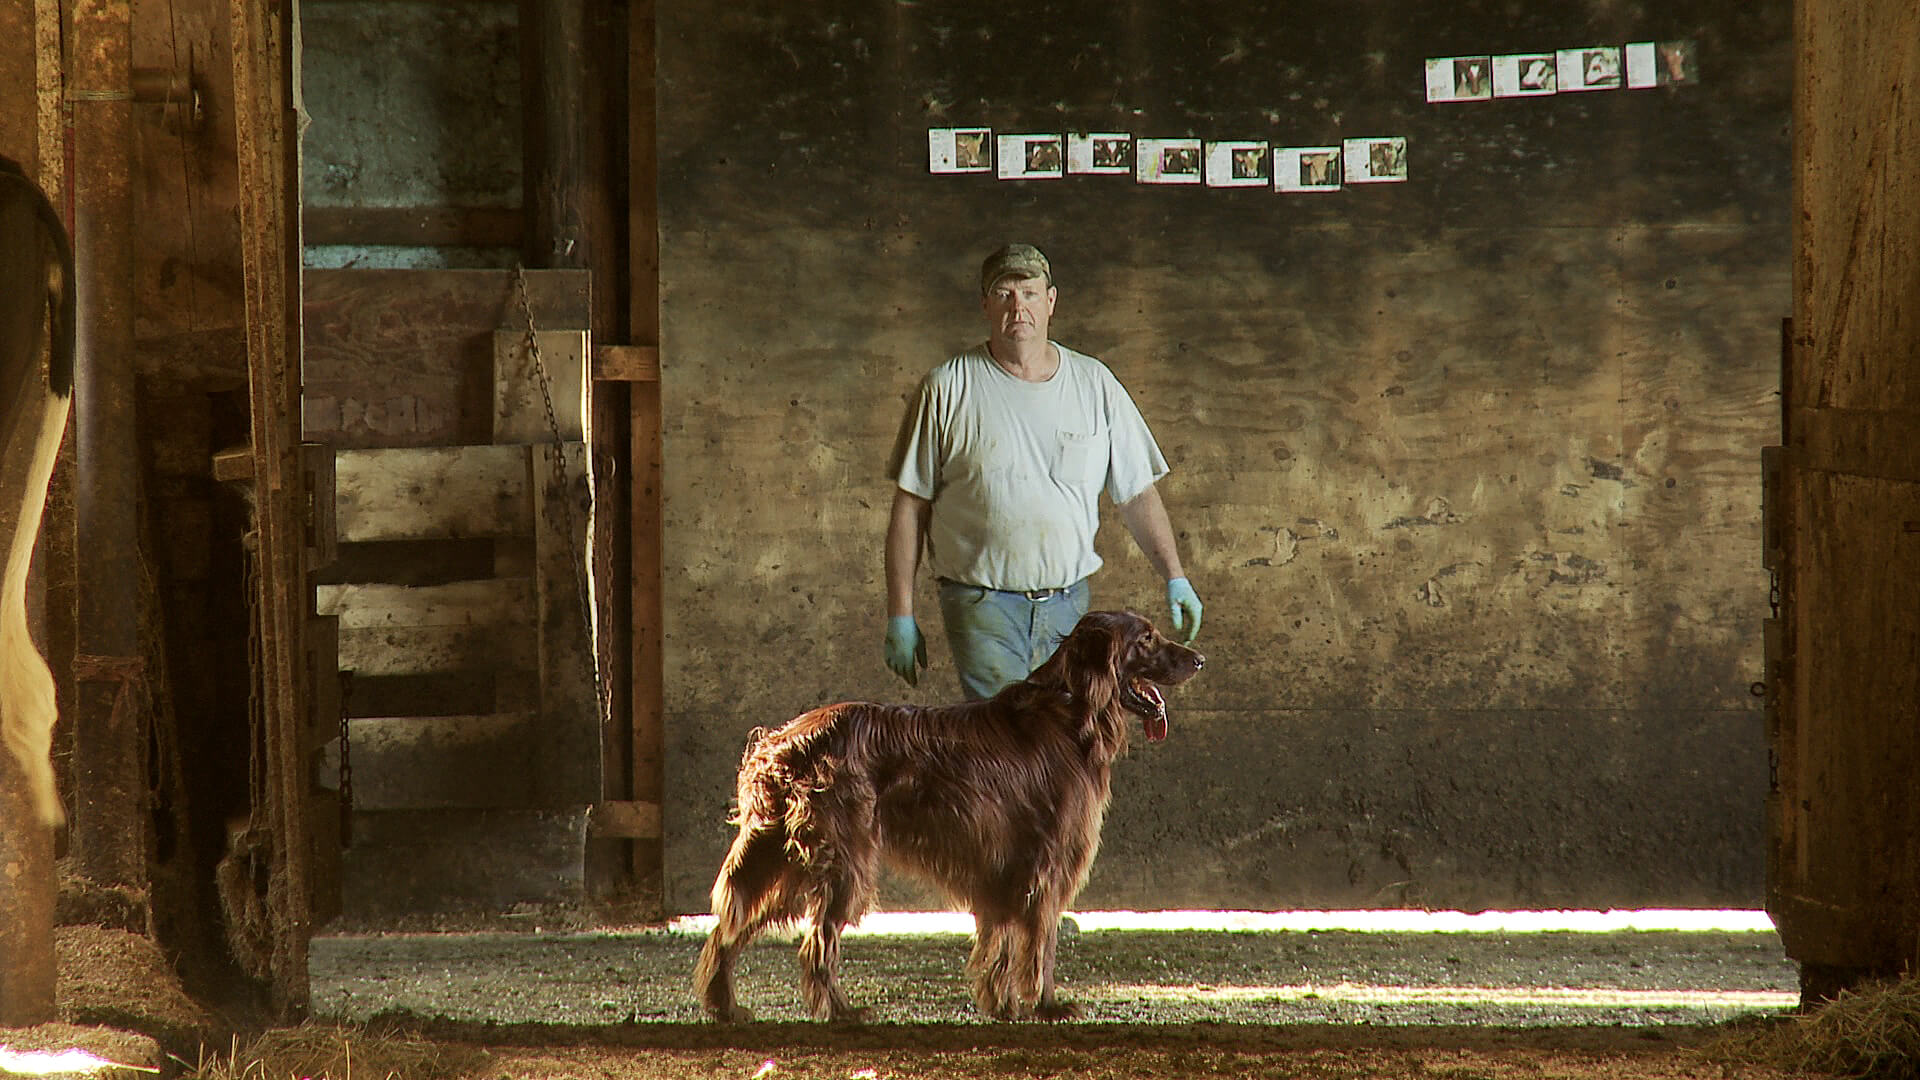 Still from Betting the Farm. A farmer with gloves walking toward a dog, in a barn.